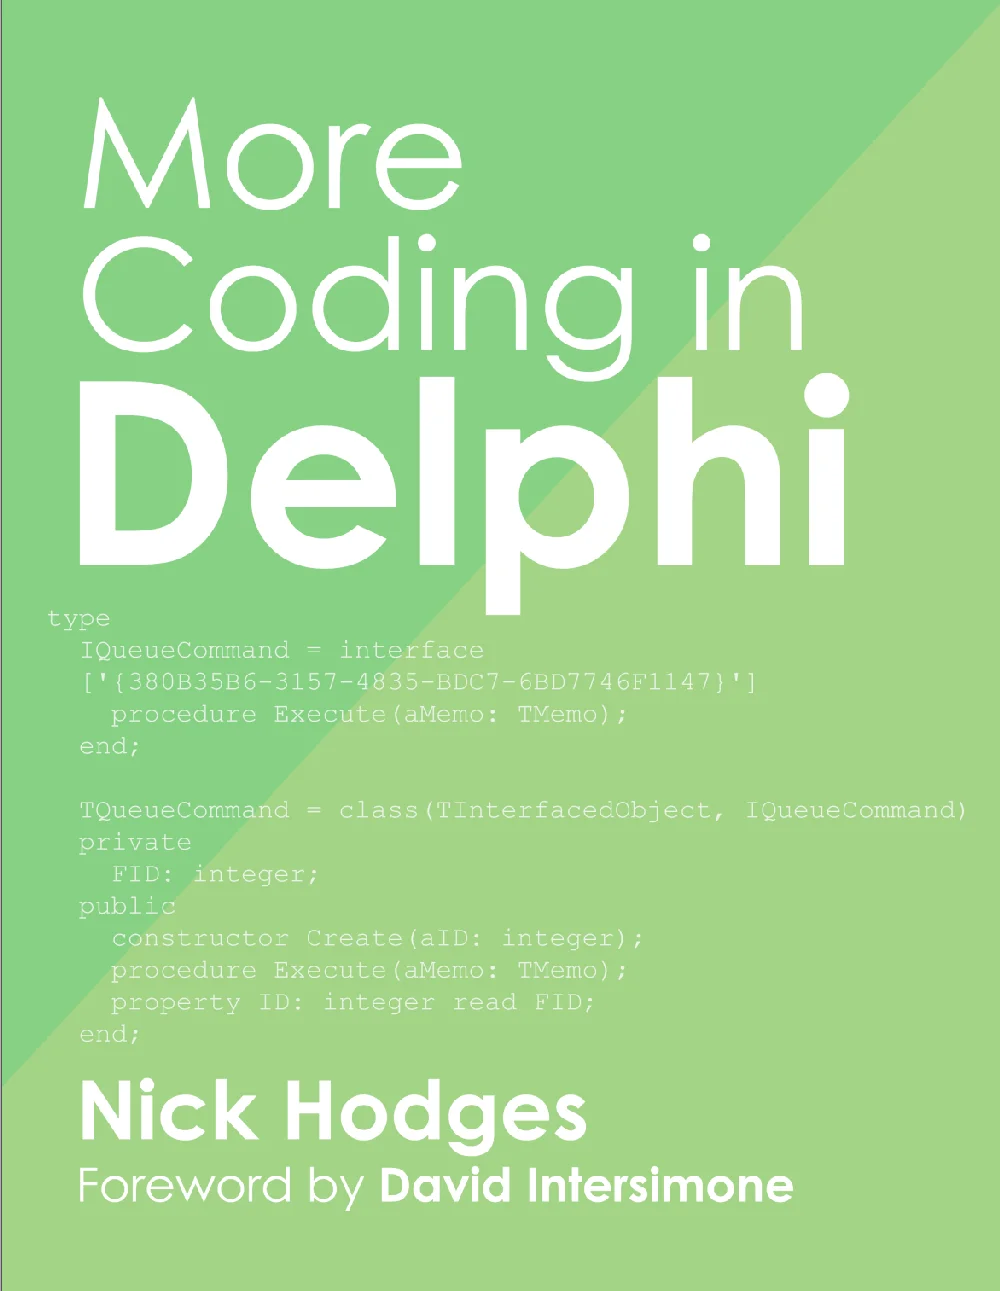 More Coding in Delphi